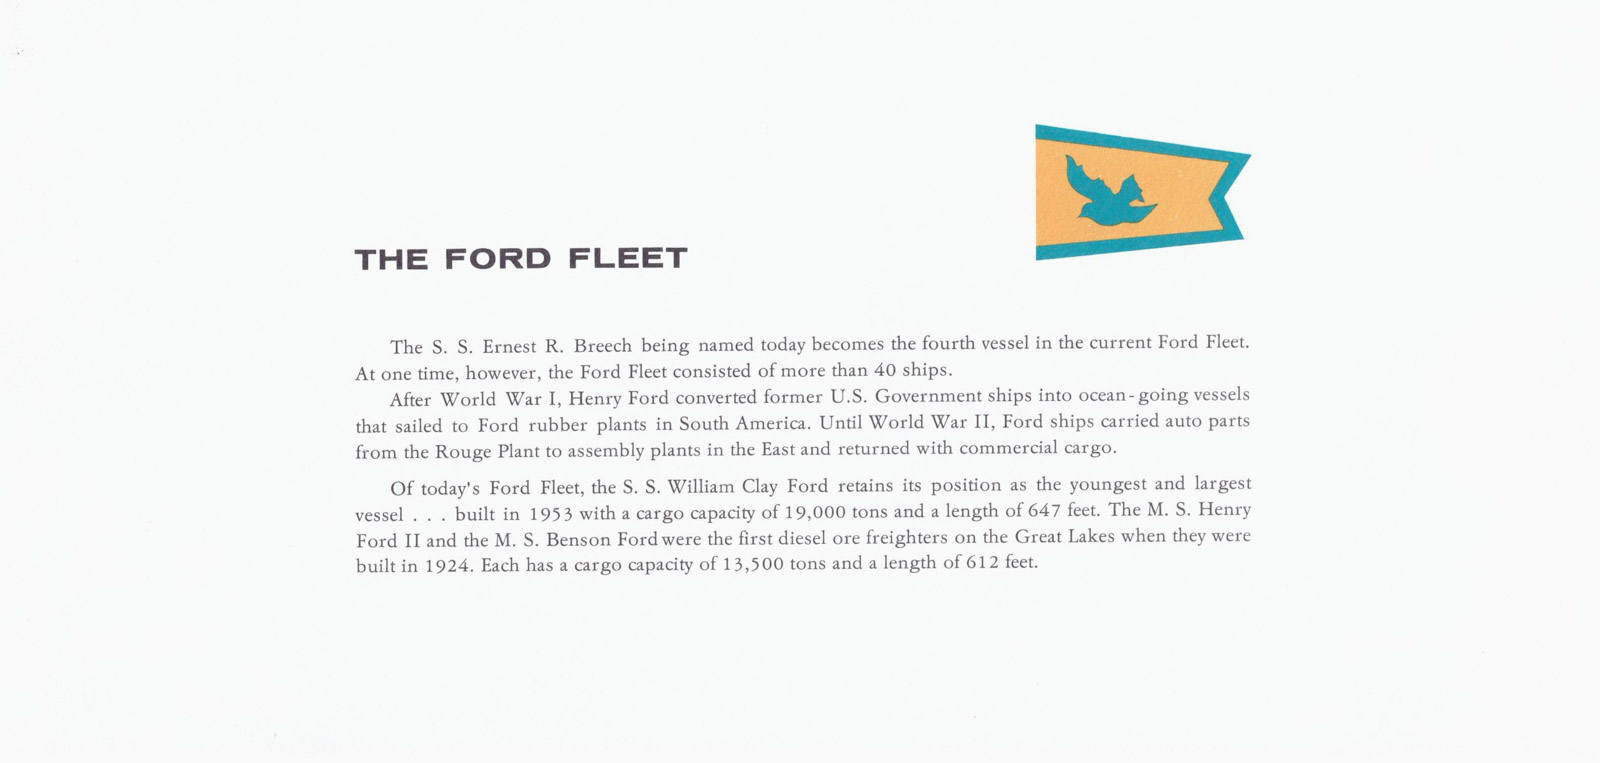 The Ford Fleet